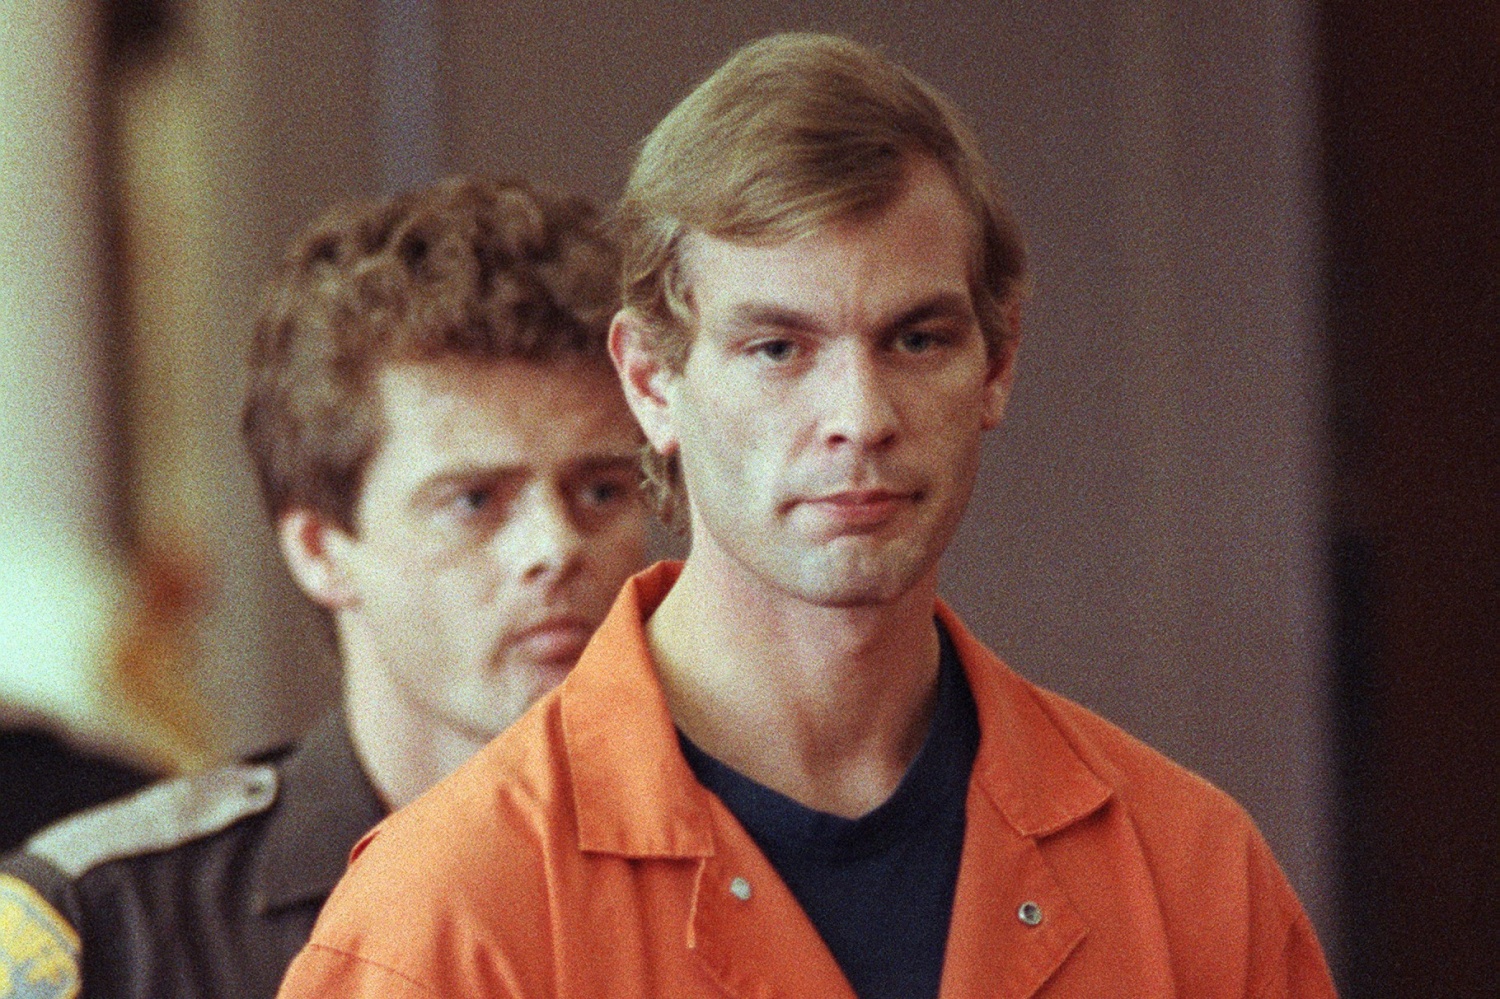 Jeffrey Dahmer #39 s Last Words Before His Death: Secret Plot To Murder